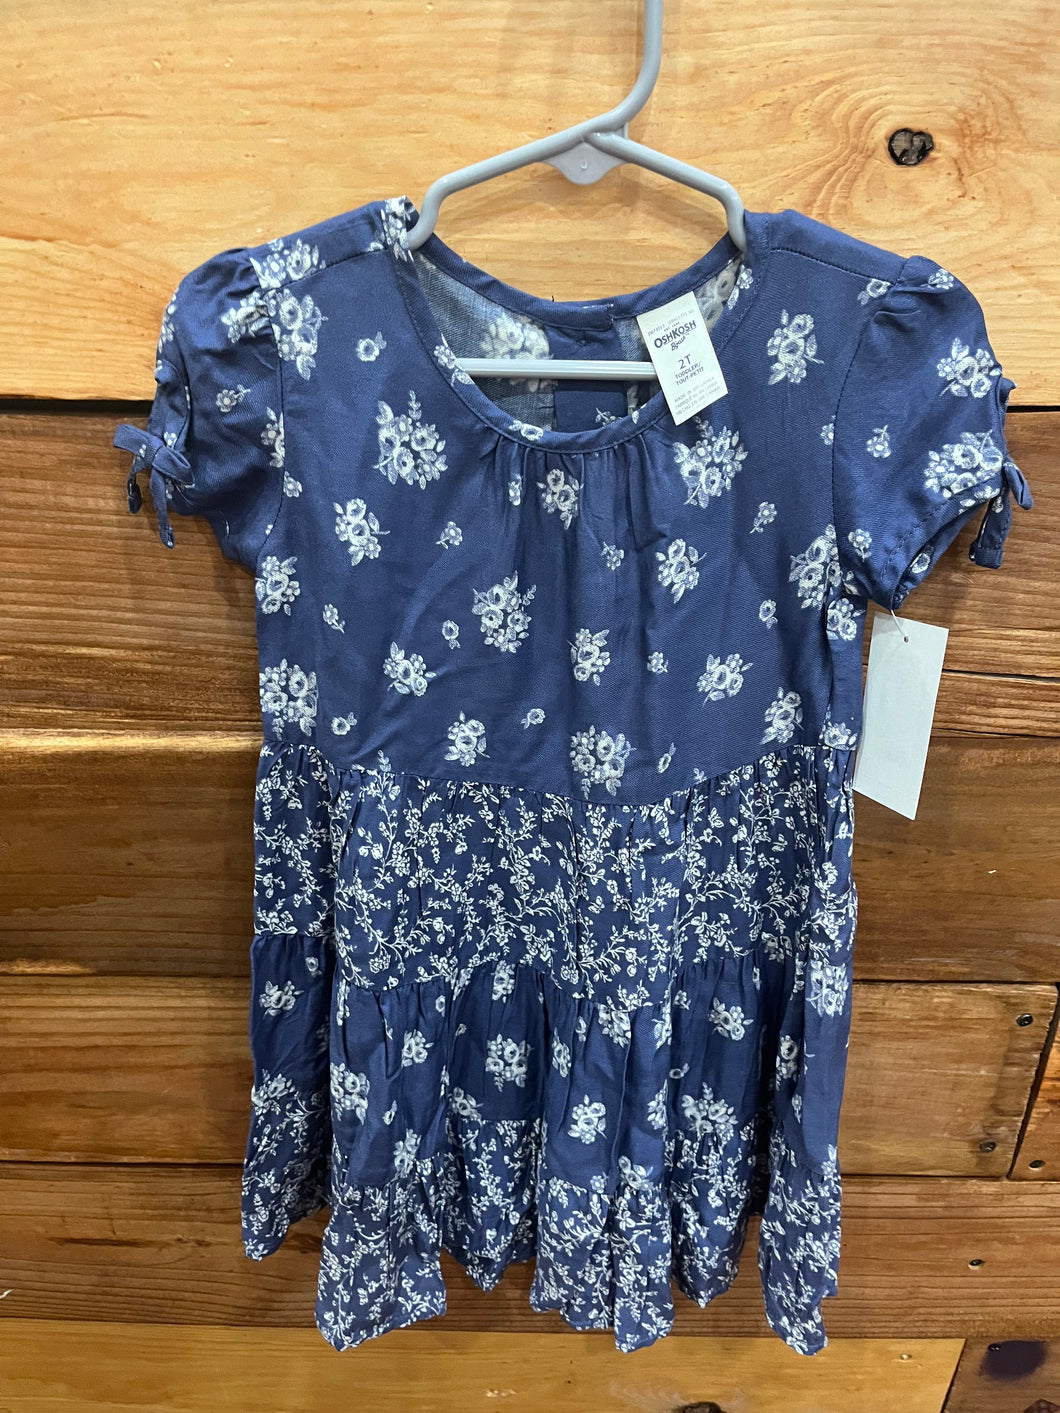 Osh Kosh Blue Flower Dress Size 2T